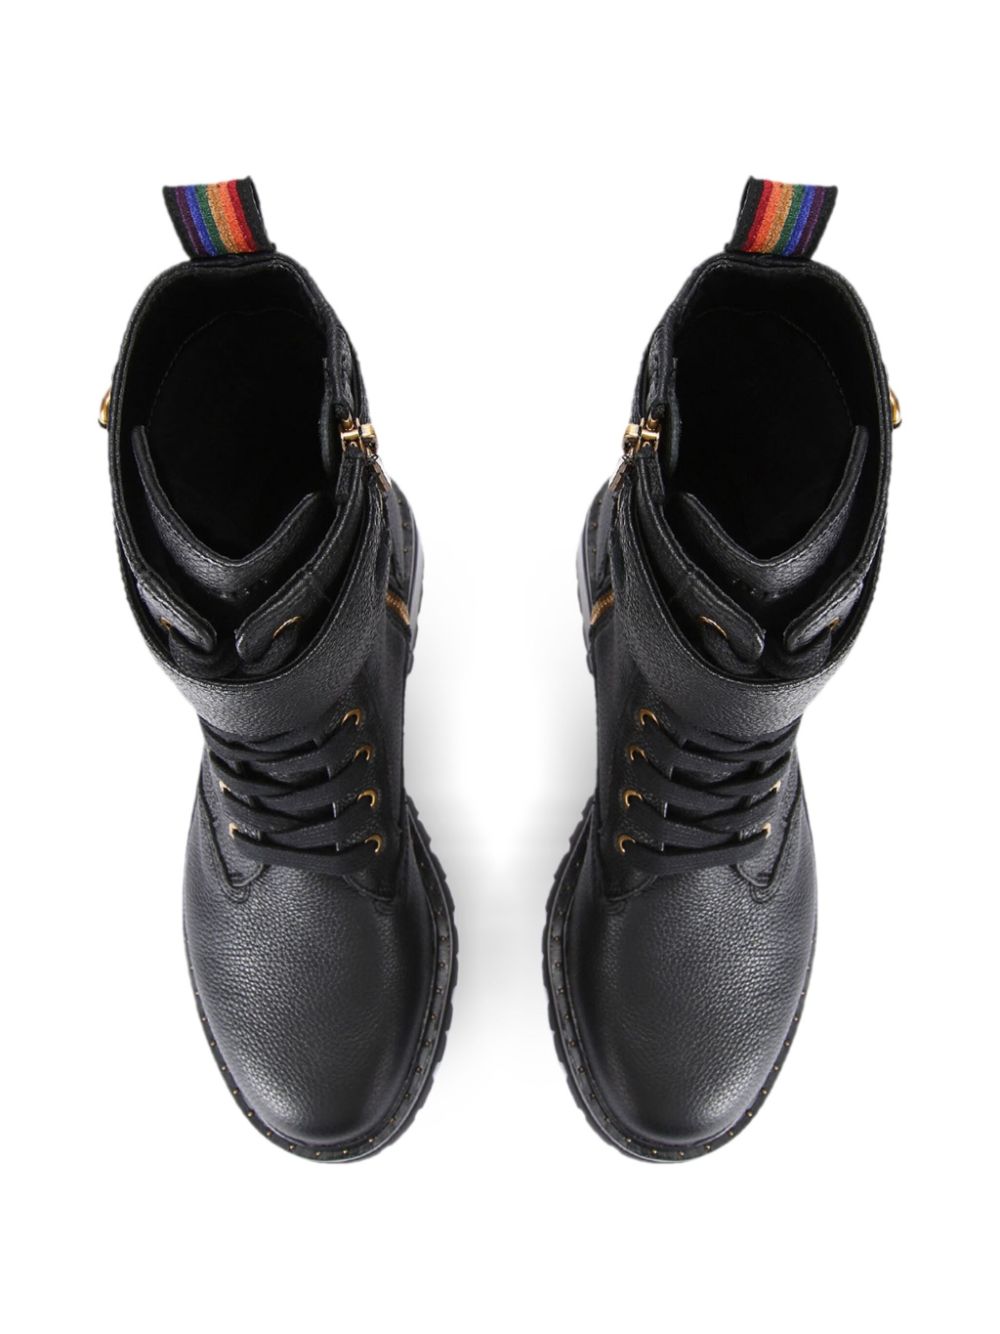 Kurt Geiger London Brooke Leather Combat Boots - Farfetch